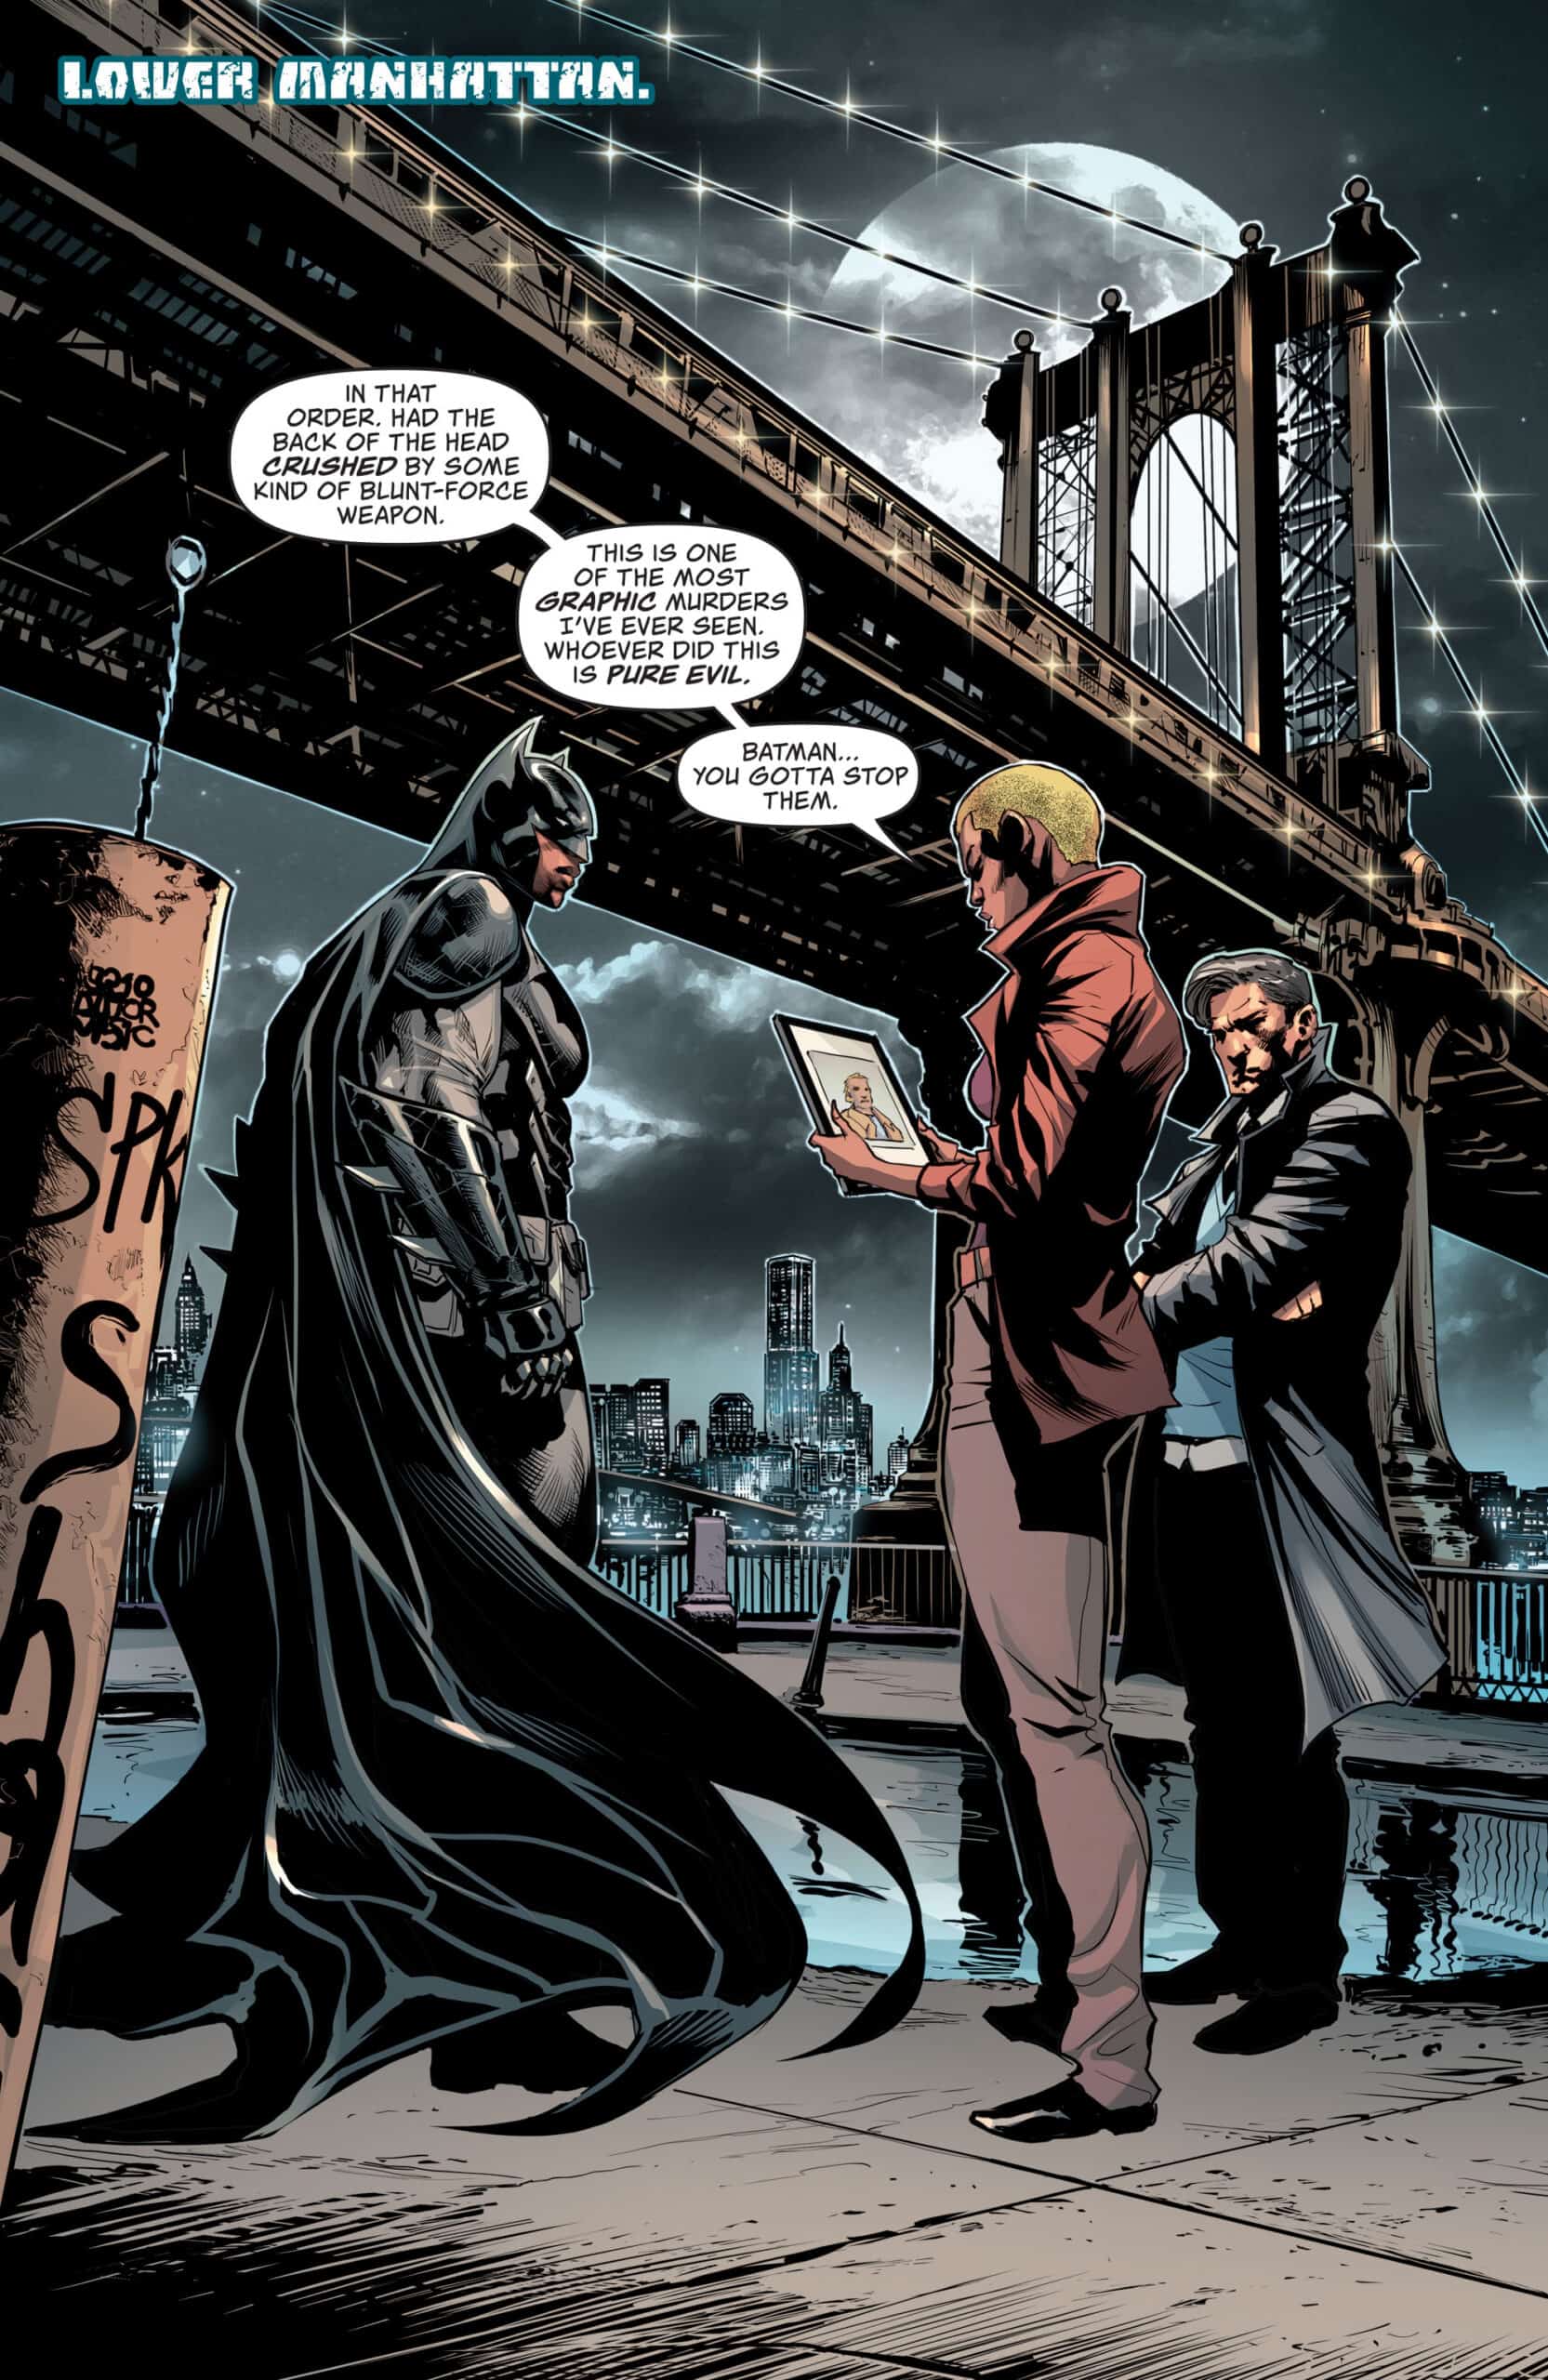 SNEAK PEAK: Preview of DC's I AM BATMAN #7 (On Sale 3/8!) - Comic Watch